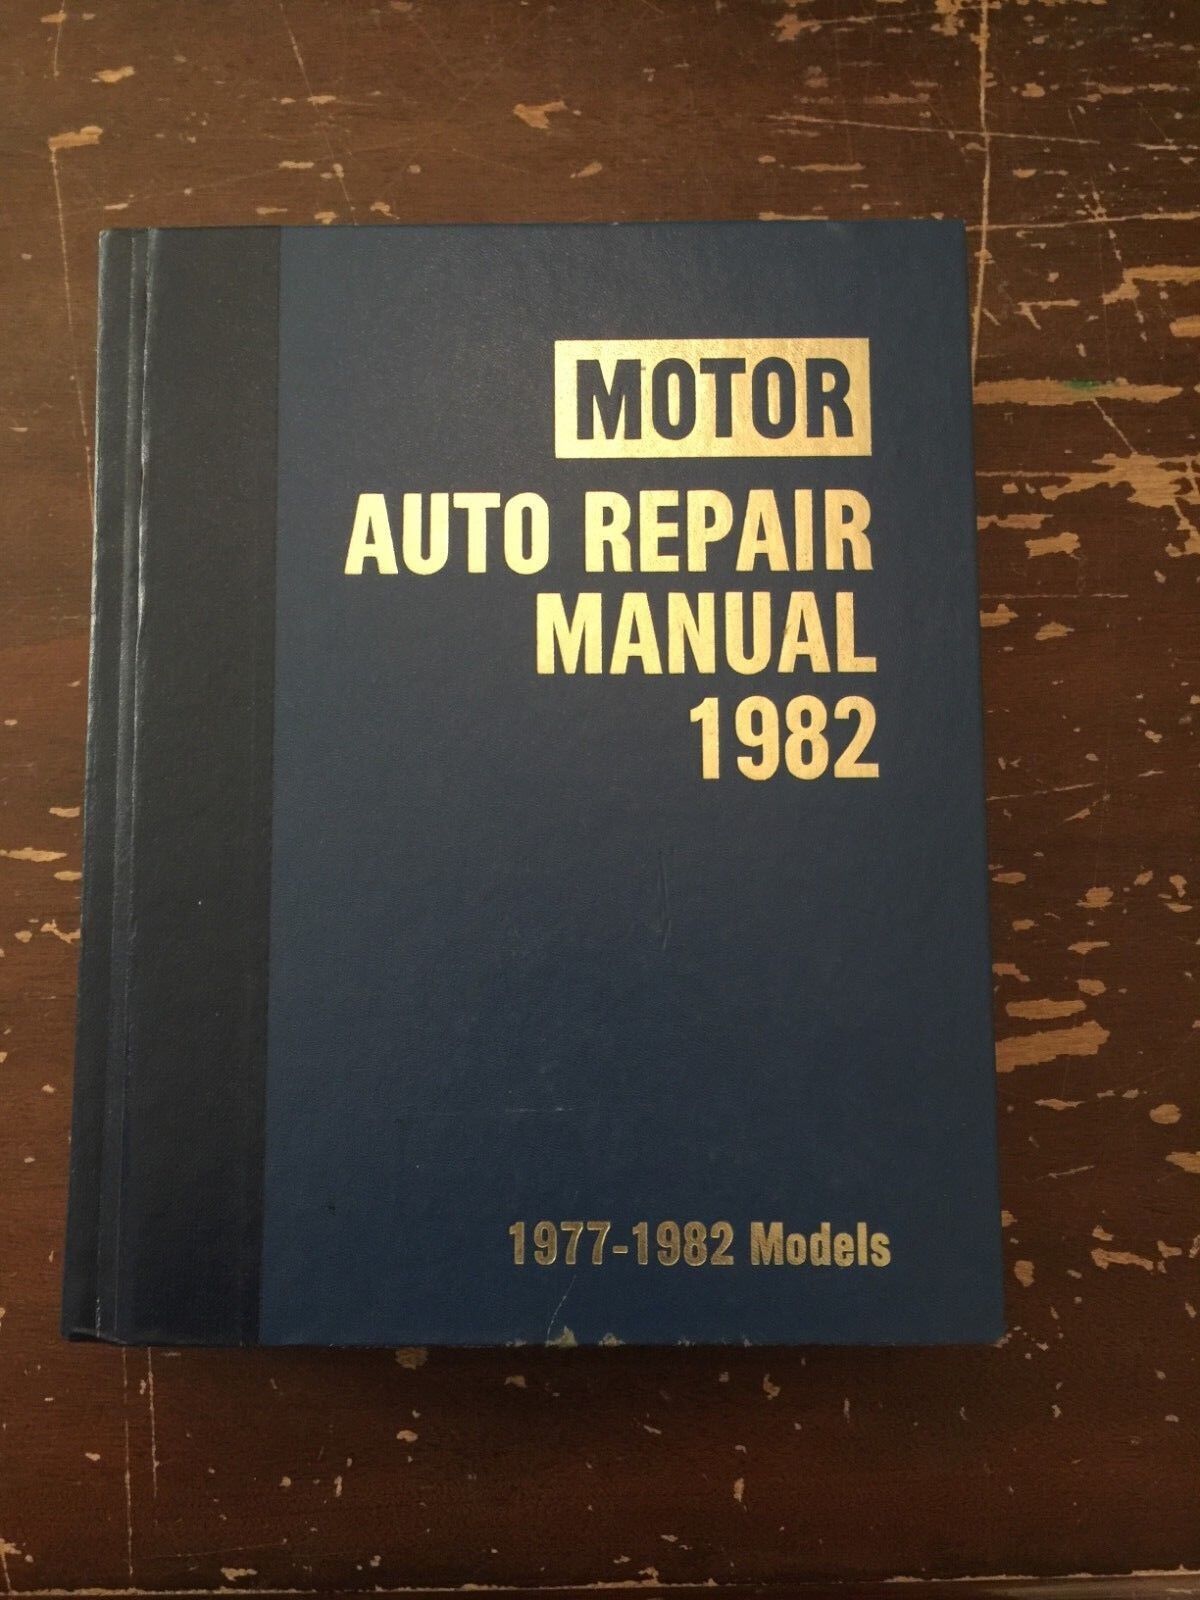 1982 Motor Auto Repair Manual 45th Edition First Printing 1977-1982 Models 